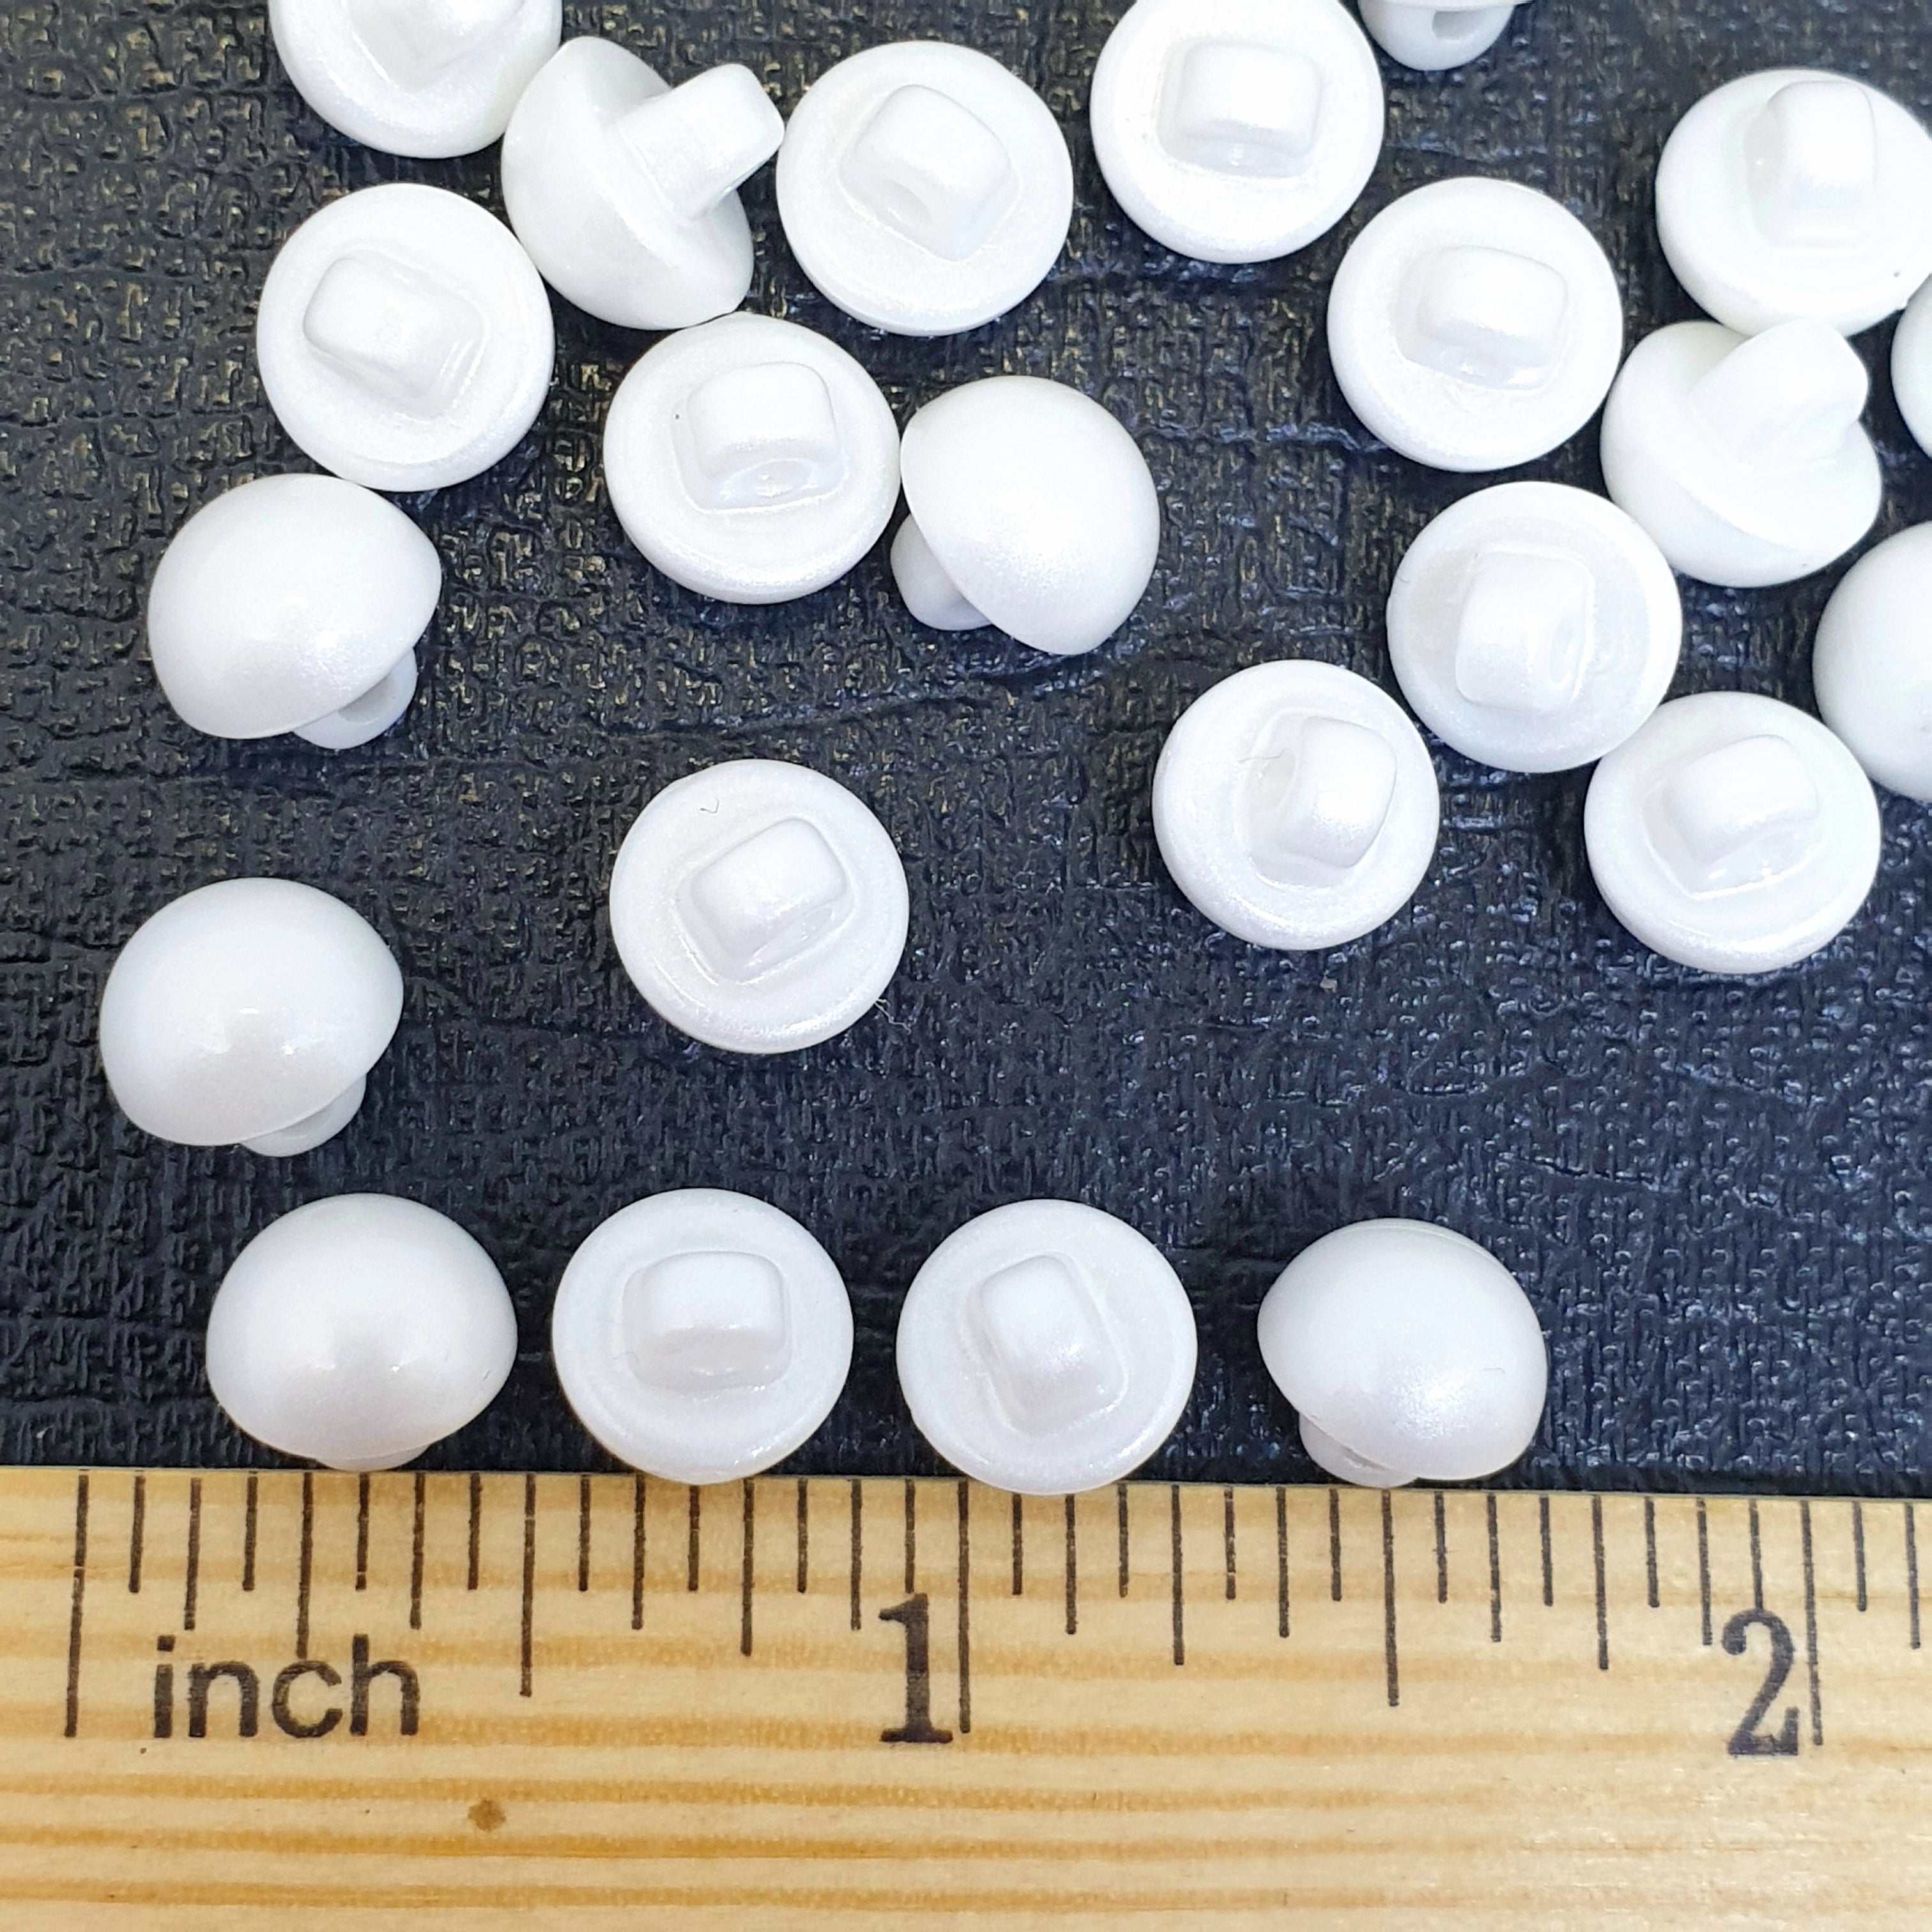 MajorCrafts 30pcs 8mm White High-Grade Acrylic Small Round Sewing Mushroom Shank Buttons